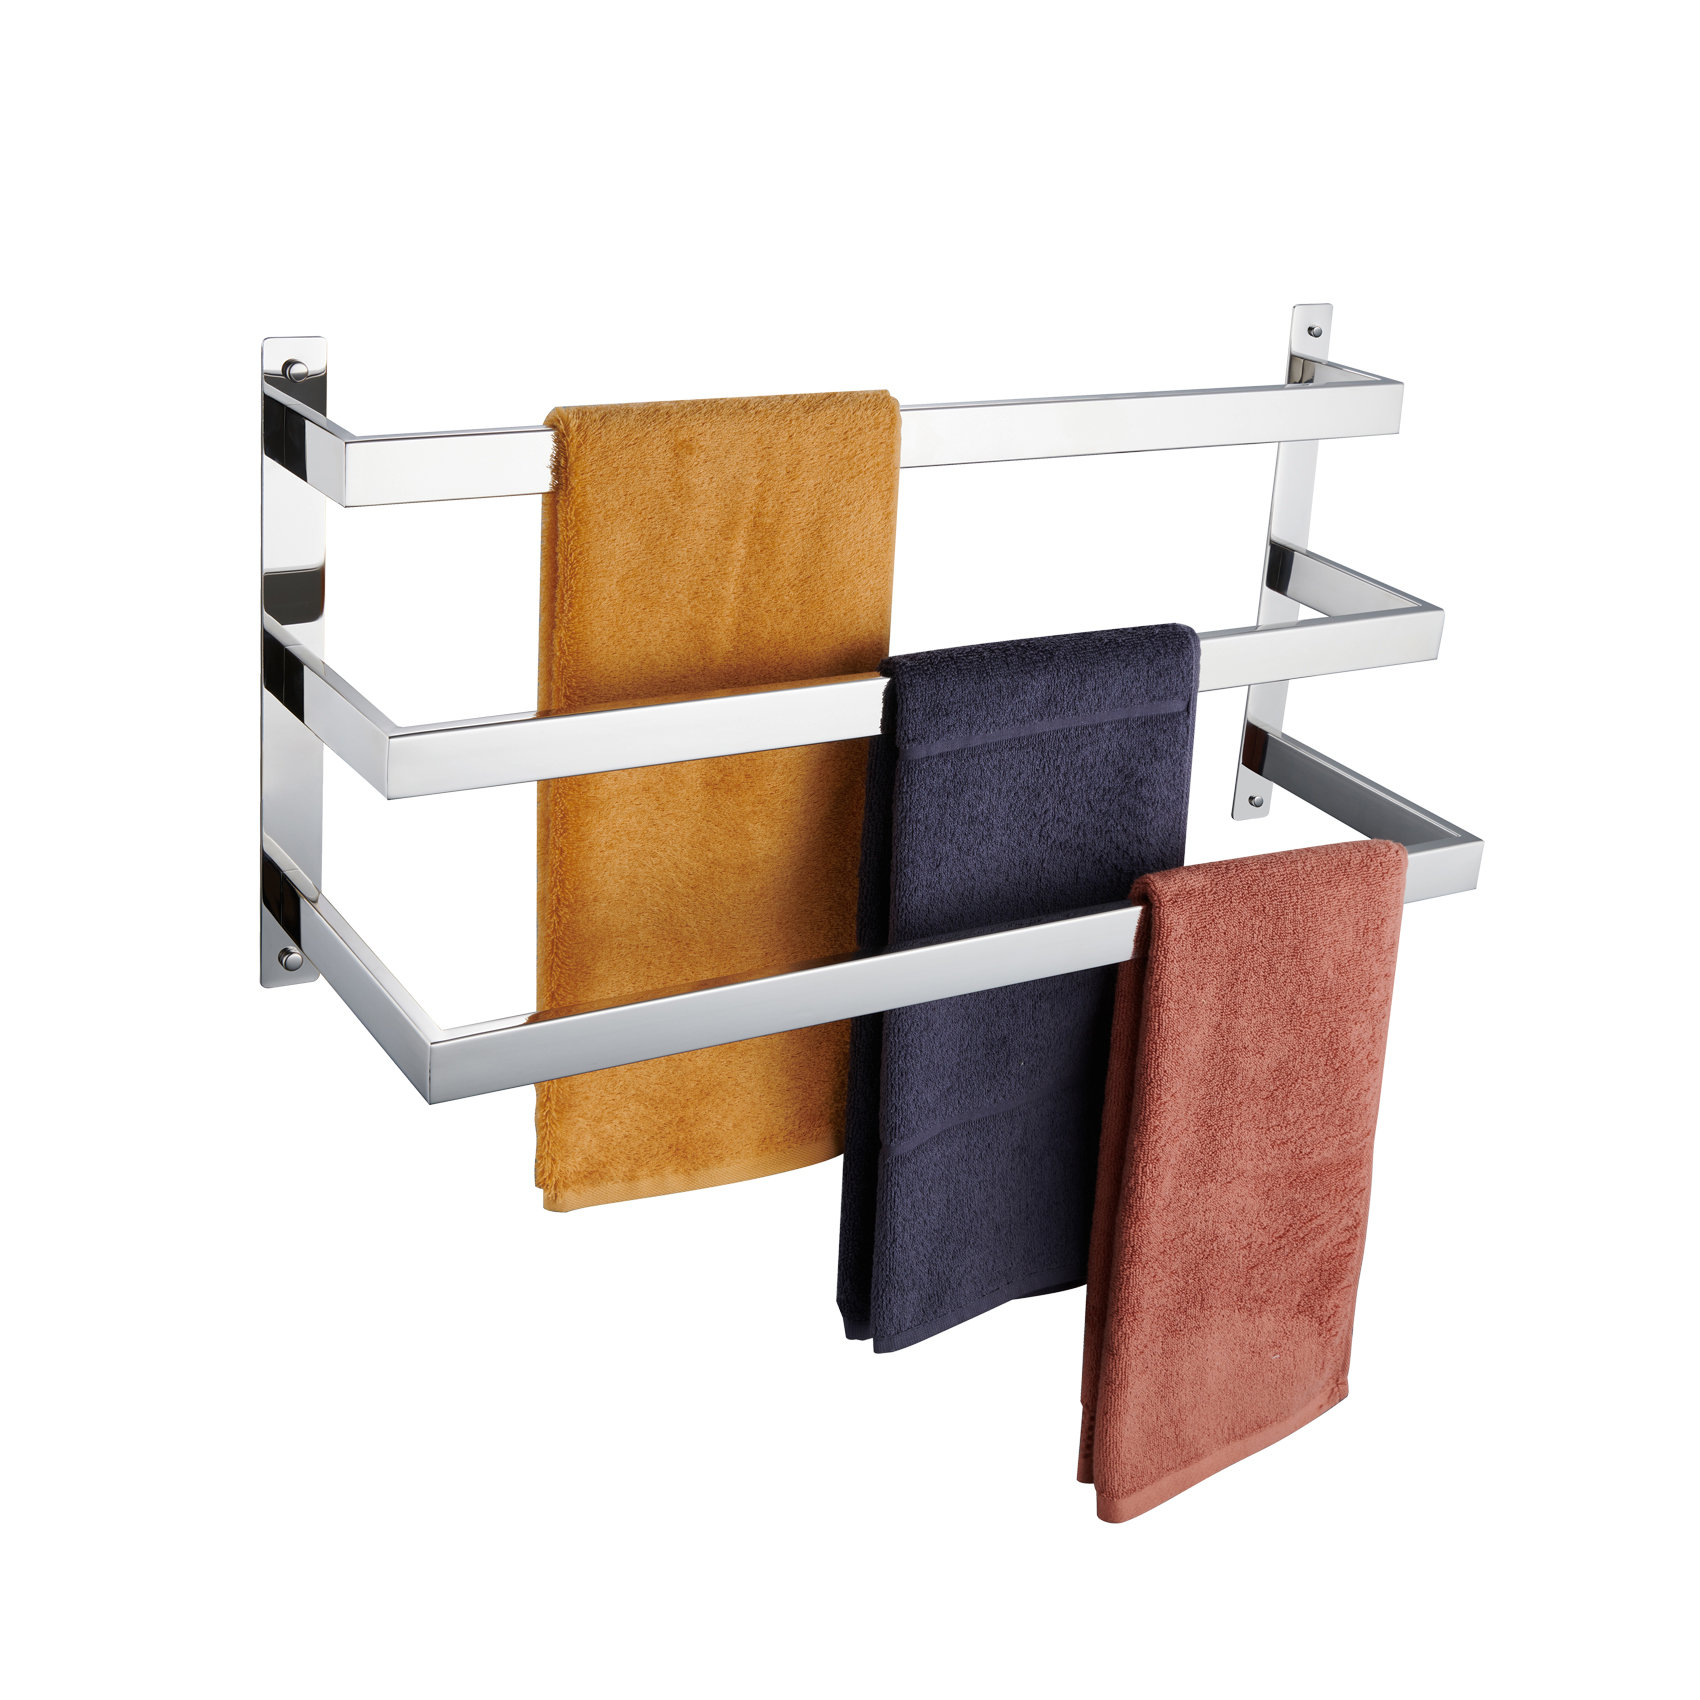 Polished Chrome Wall Mounted Towel Rack With 3 16 Inch Sliding Rails